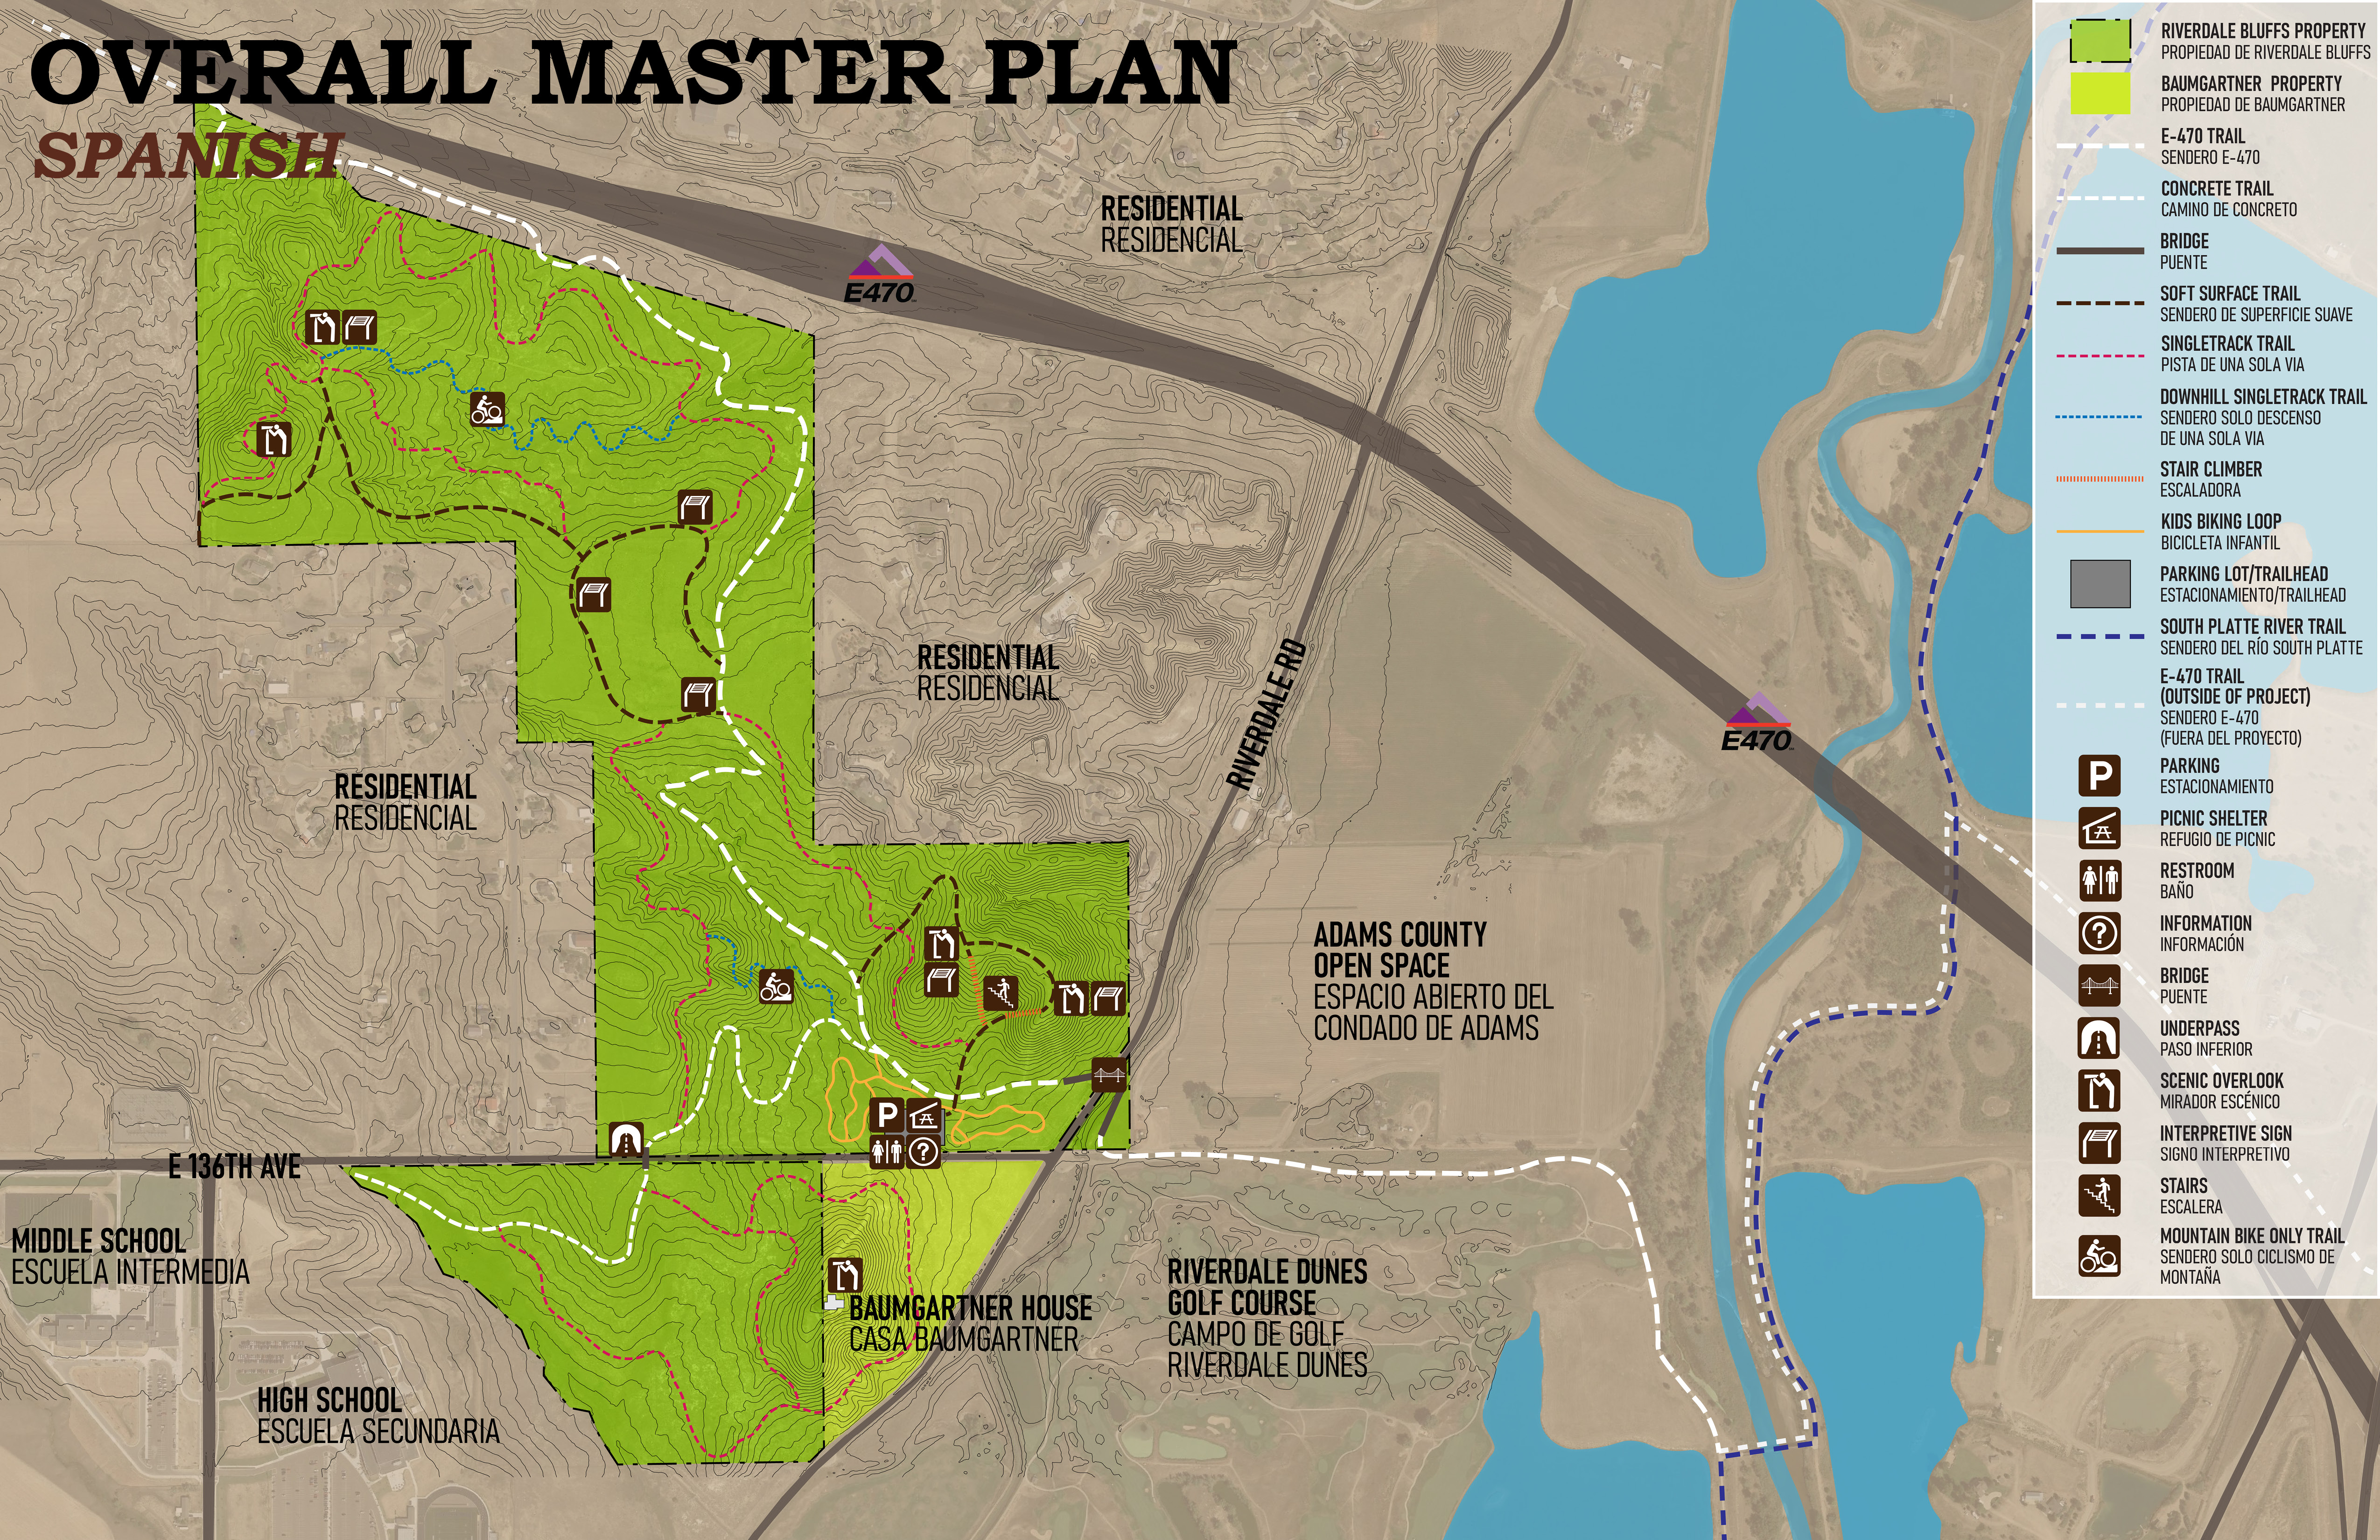 Riverdale Bluffs Master Plan